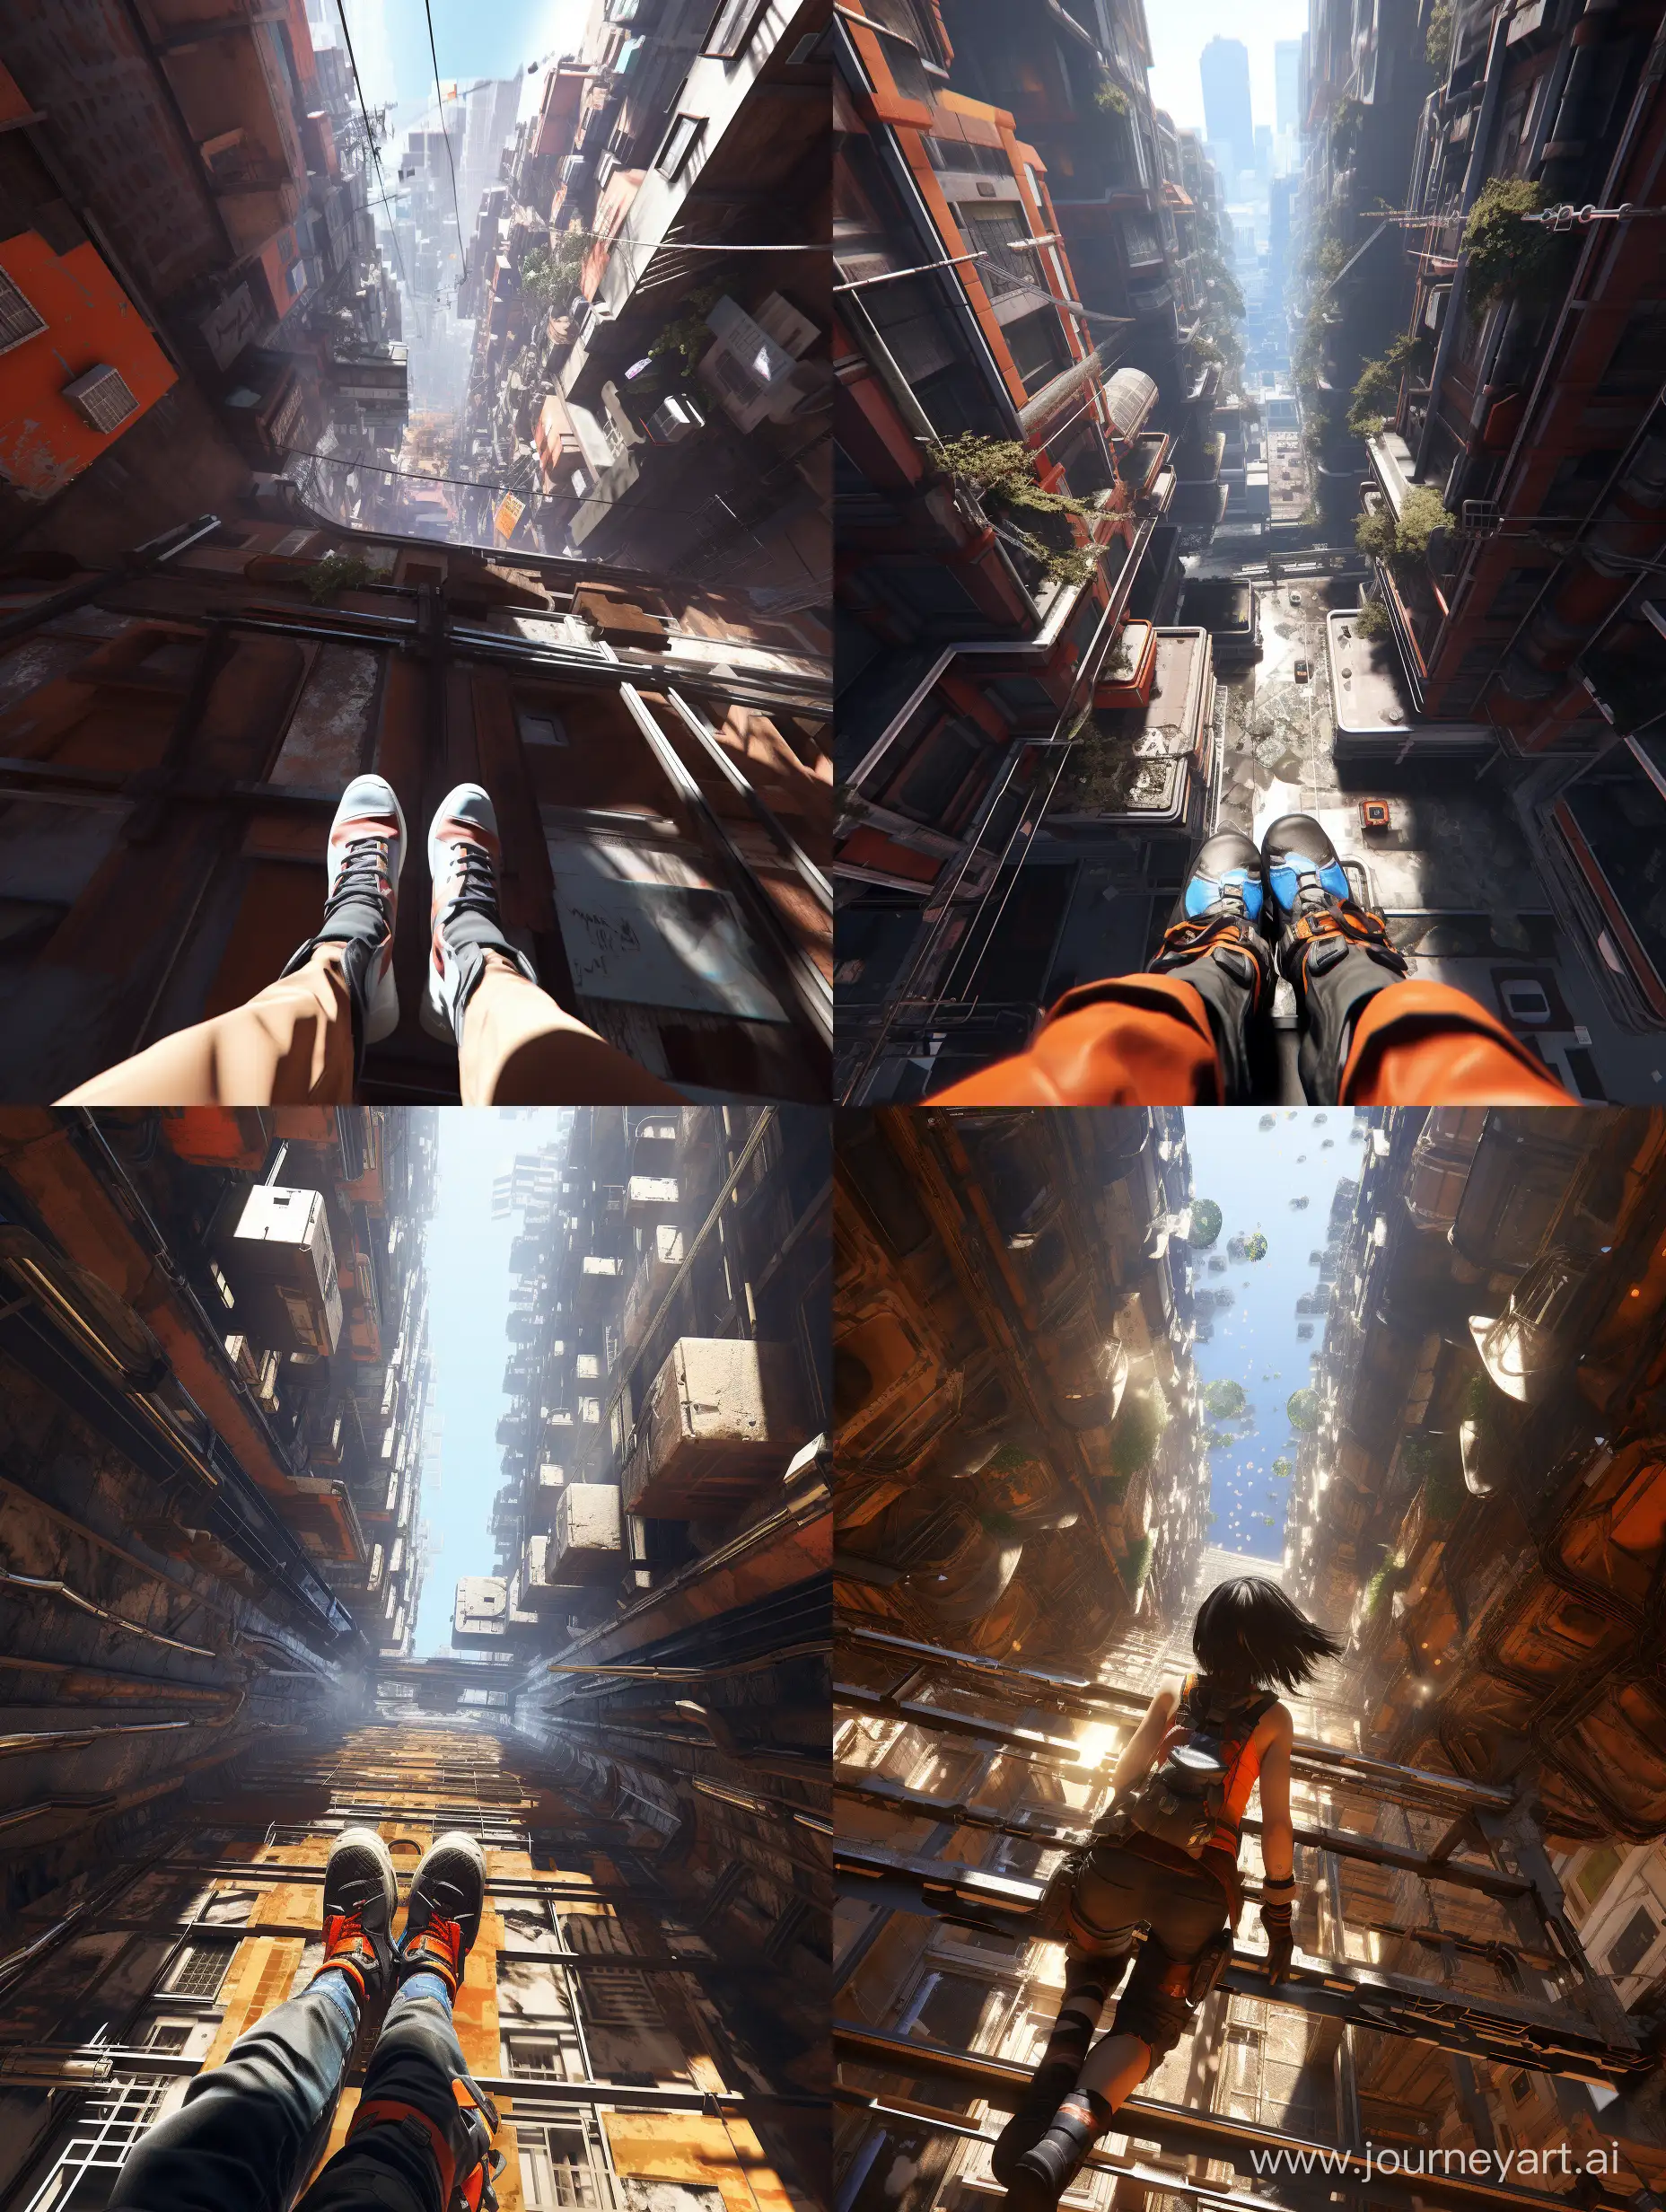 Thrilling-Cyberpunk-Escape-Daring-Descent-from-Collapsing-Skyscraper